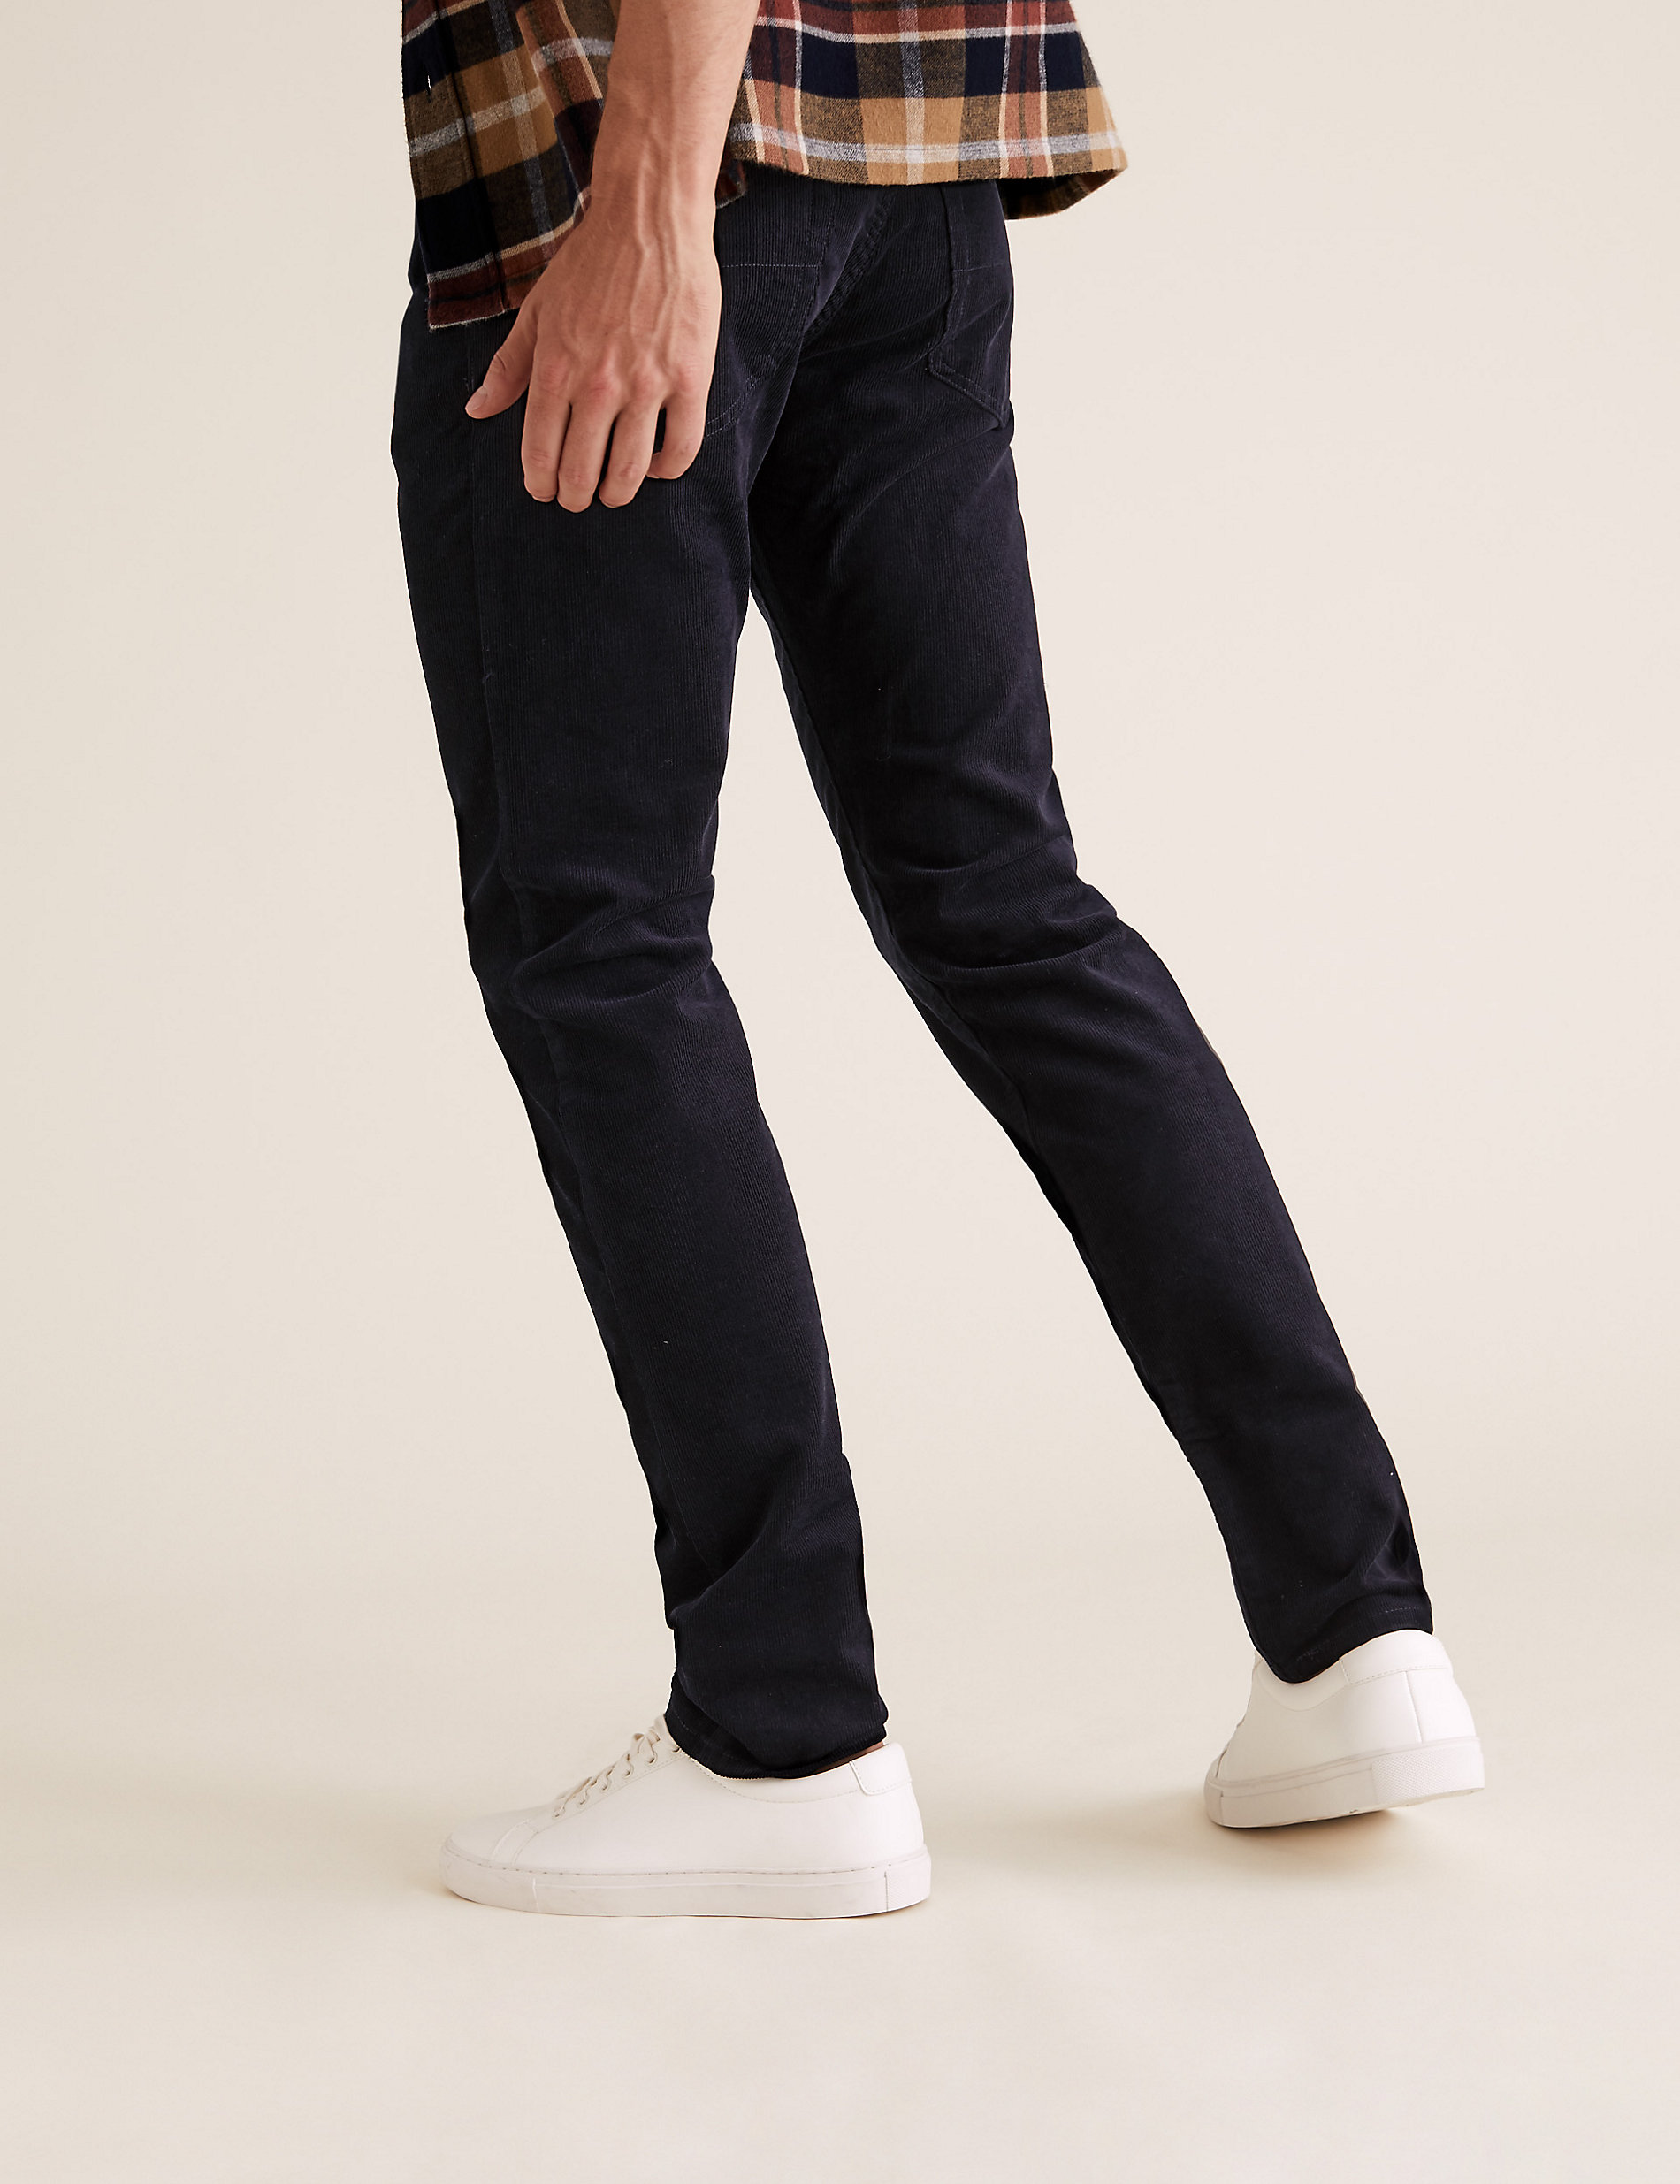 ms-259rt M&S Khaki Lightweight Cotton Elastic Back Pocket Trousers 22 Short